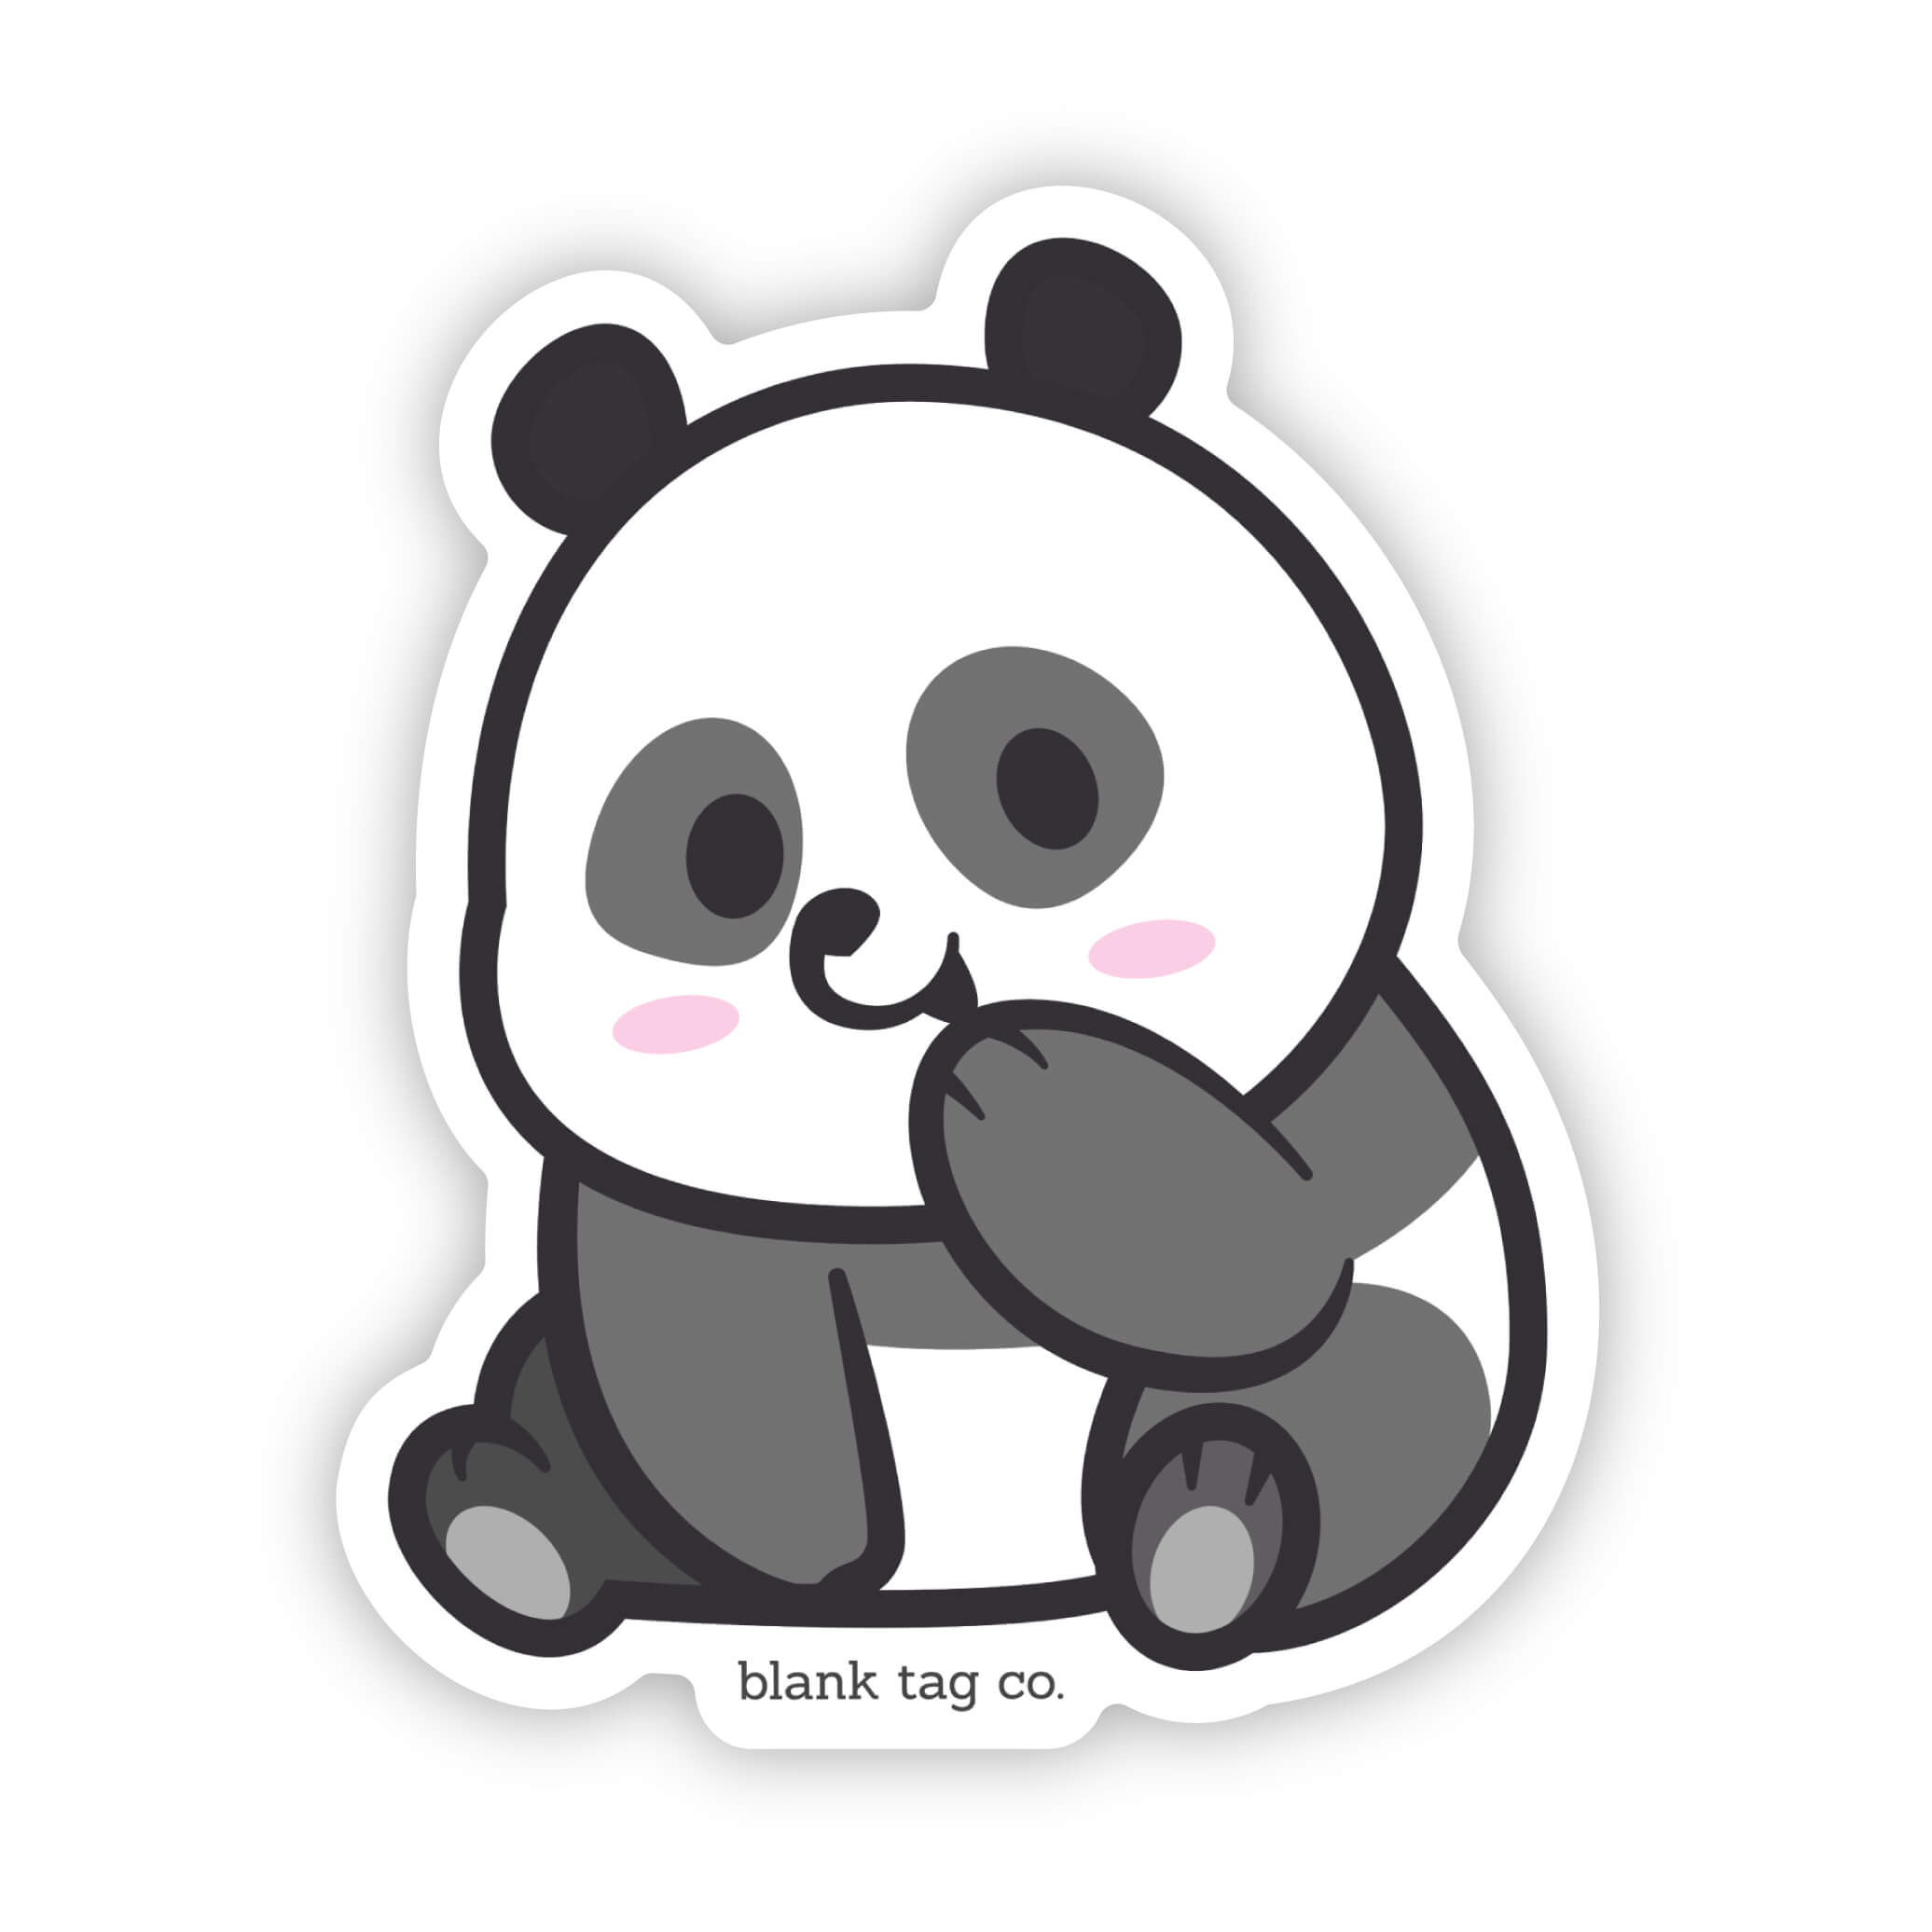 The Panda Sticker